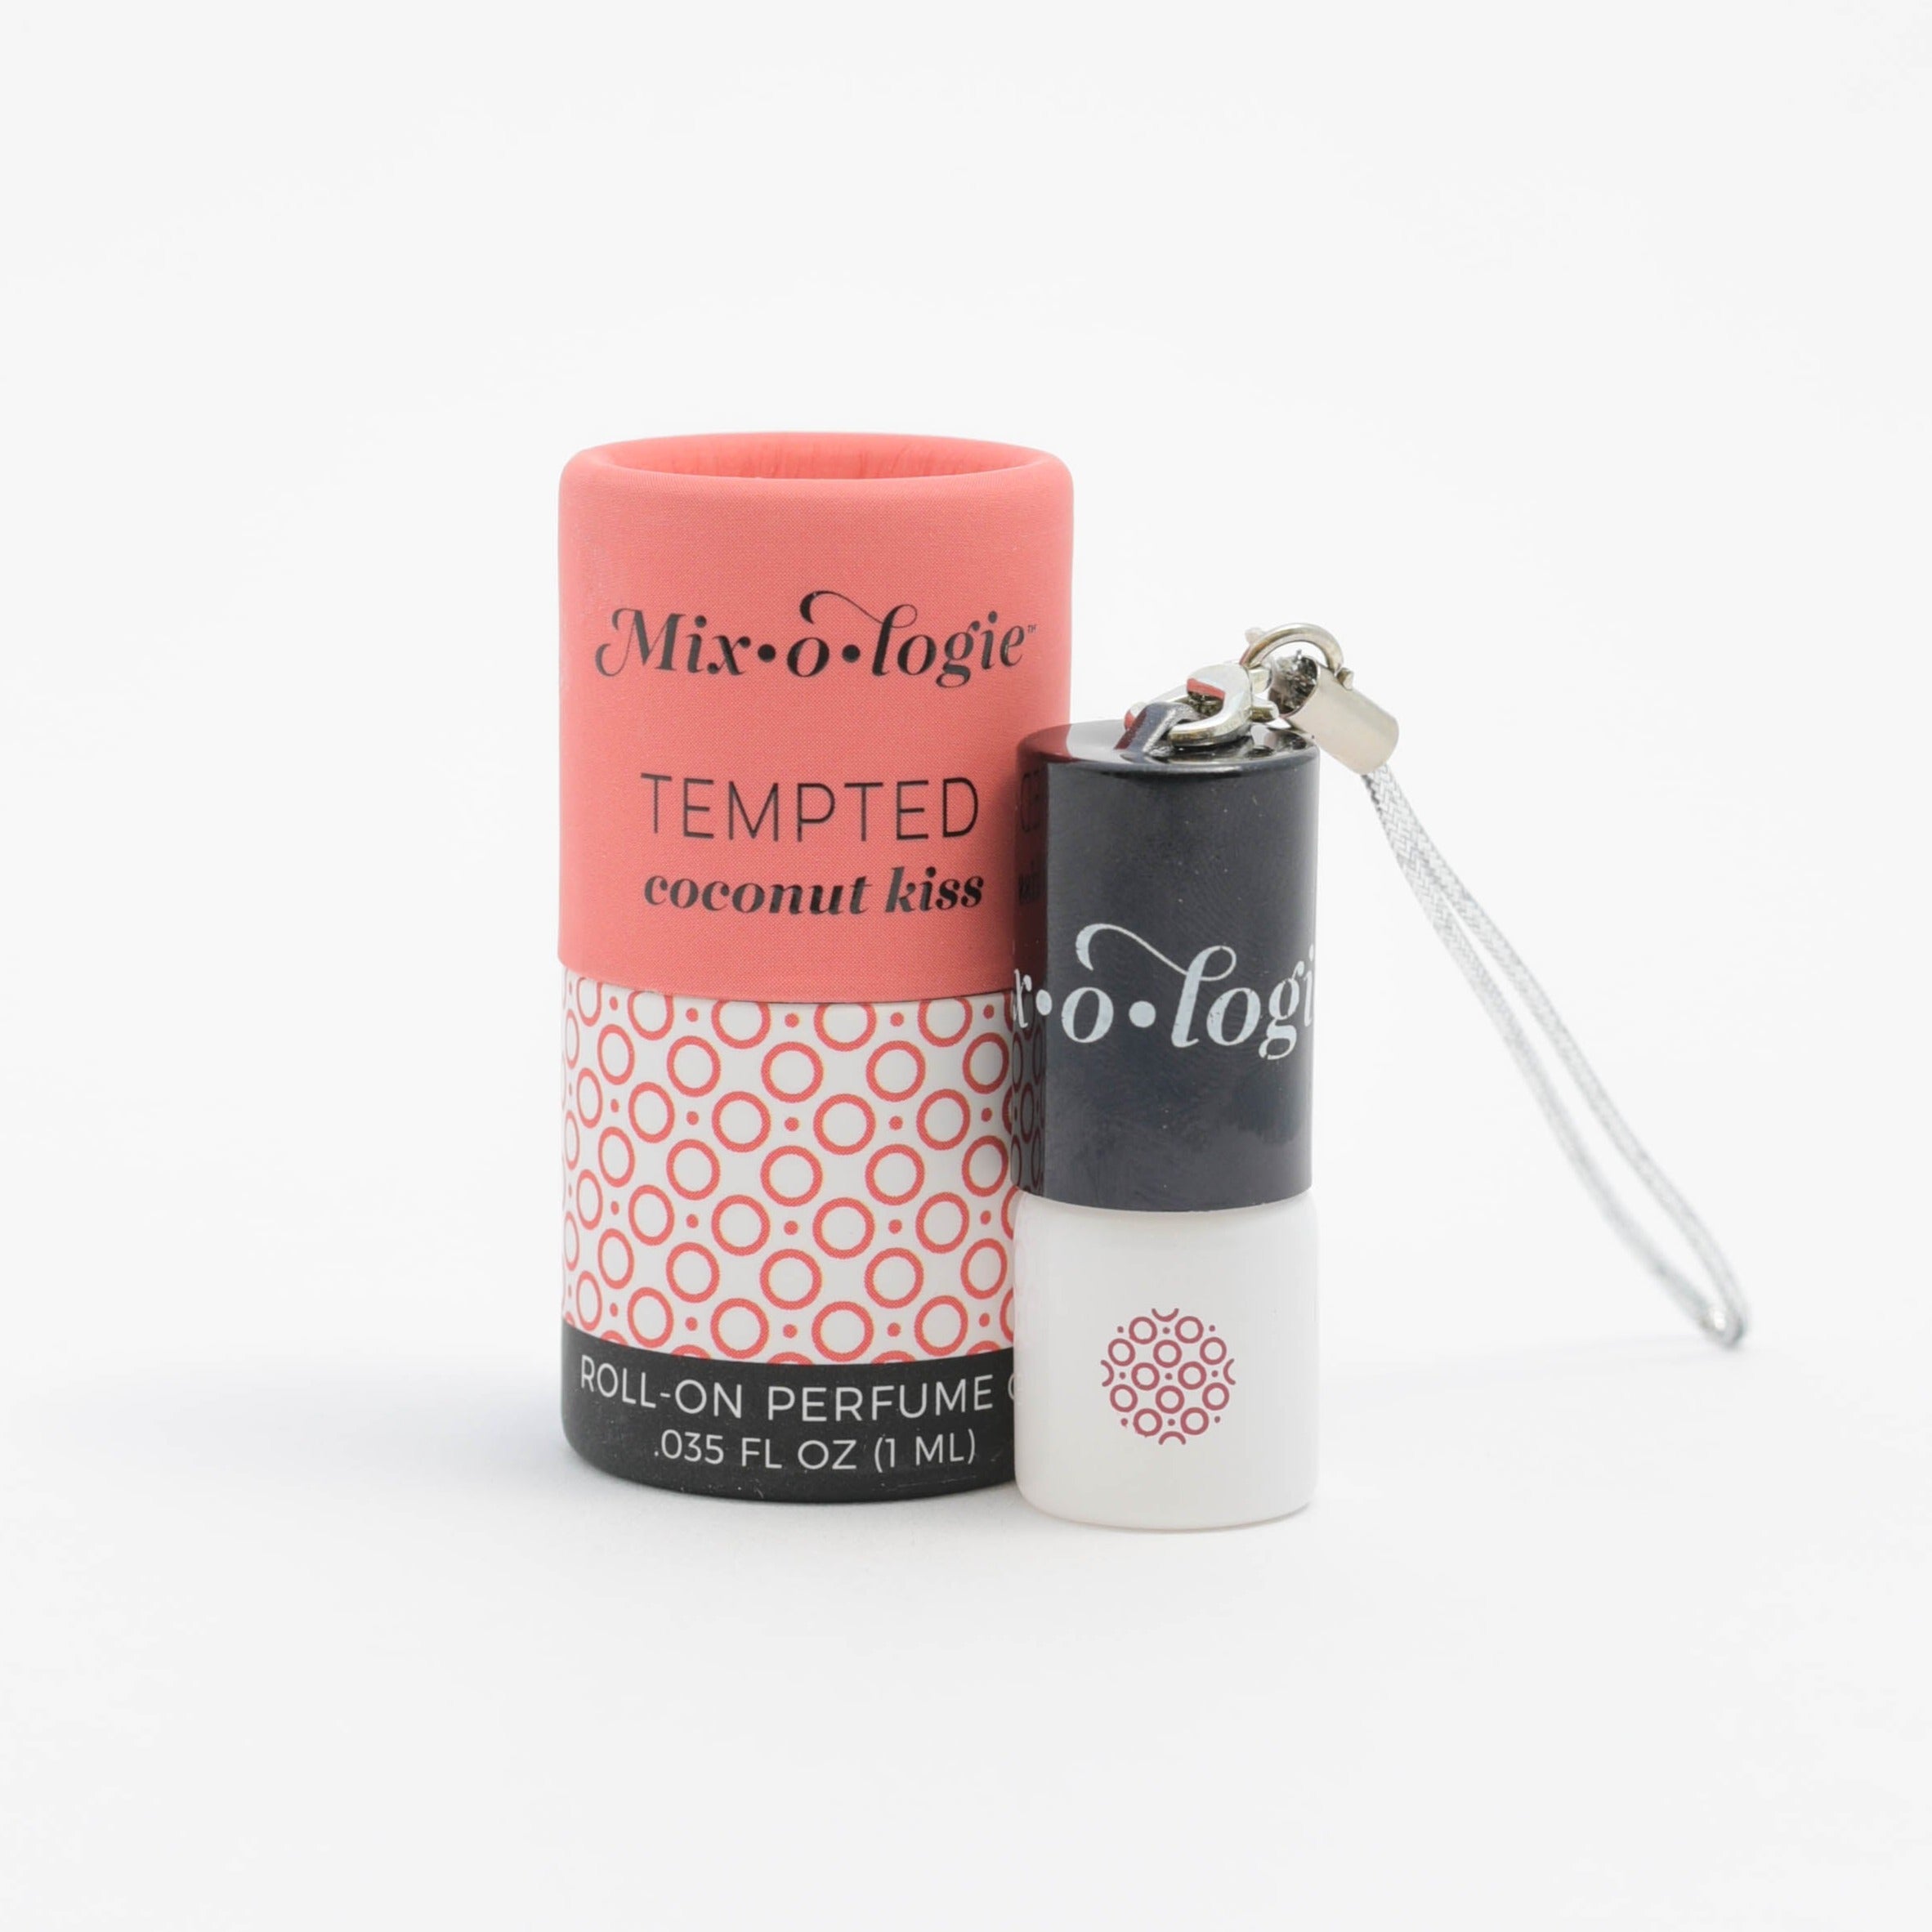 Tempted (coconut kiss) - Keychain Mini Rollerball Perfume (1 mL)